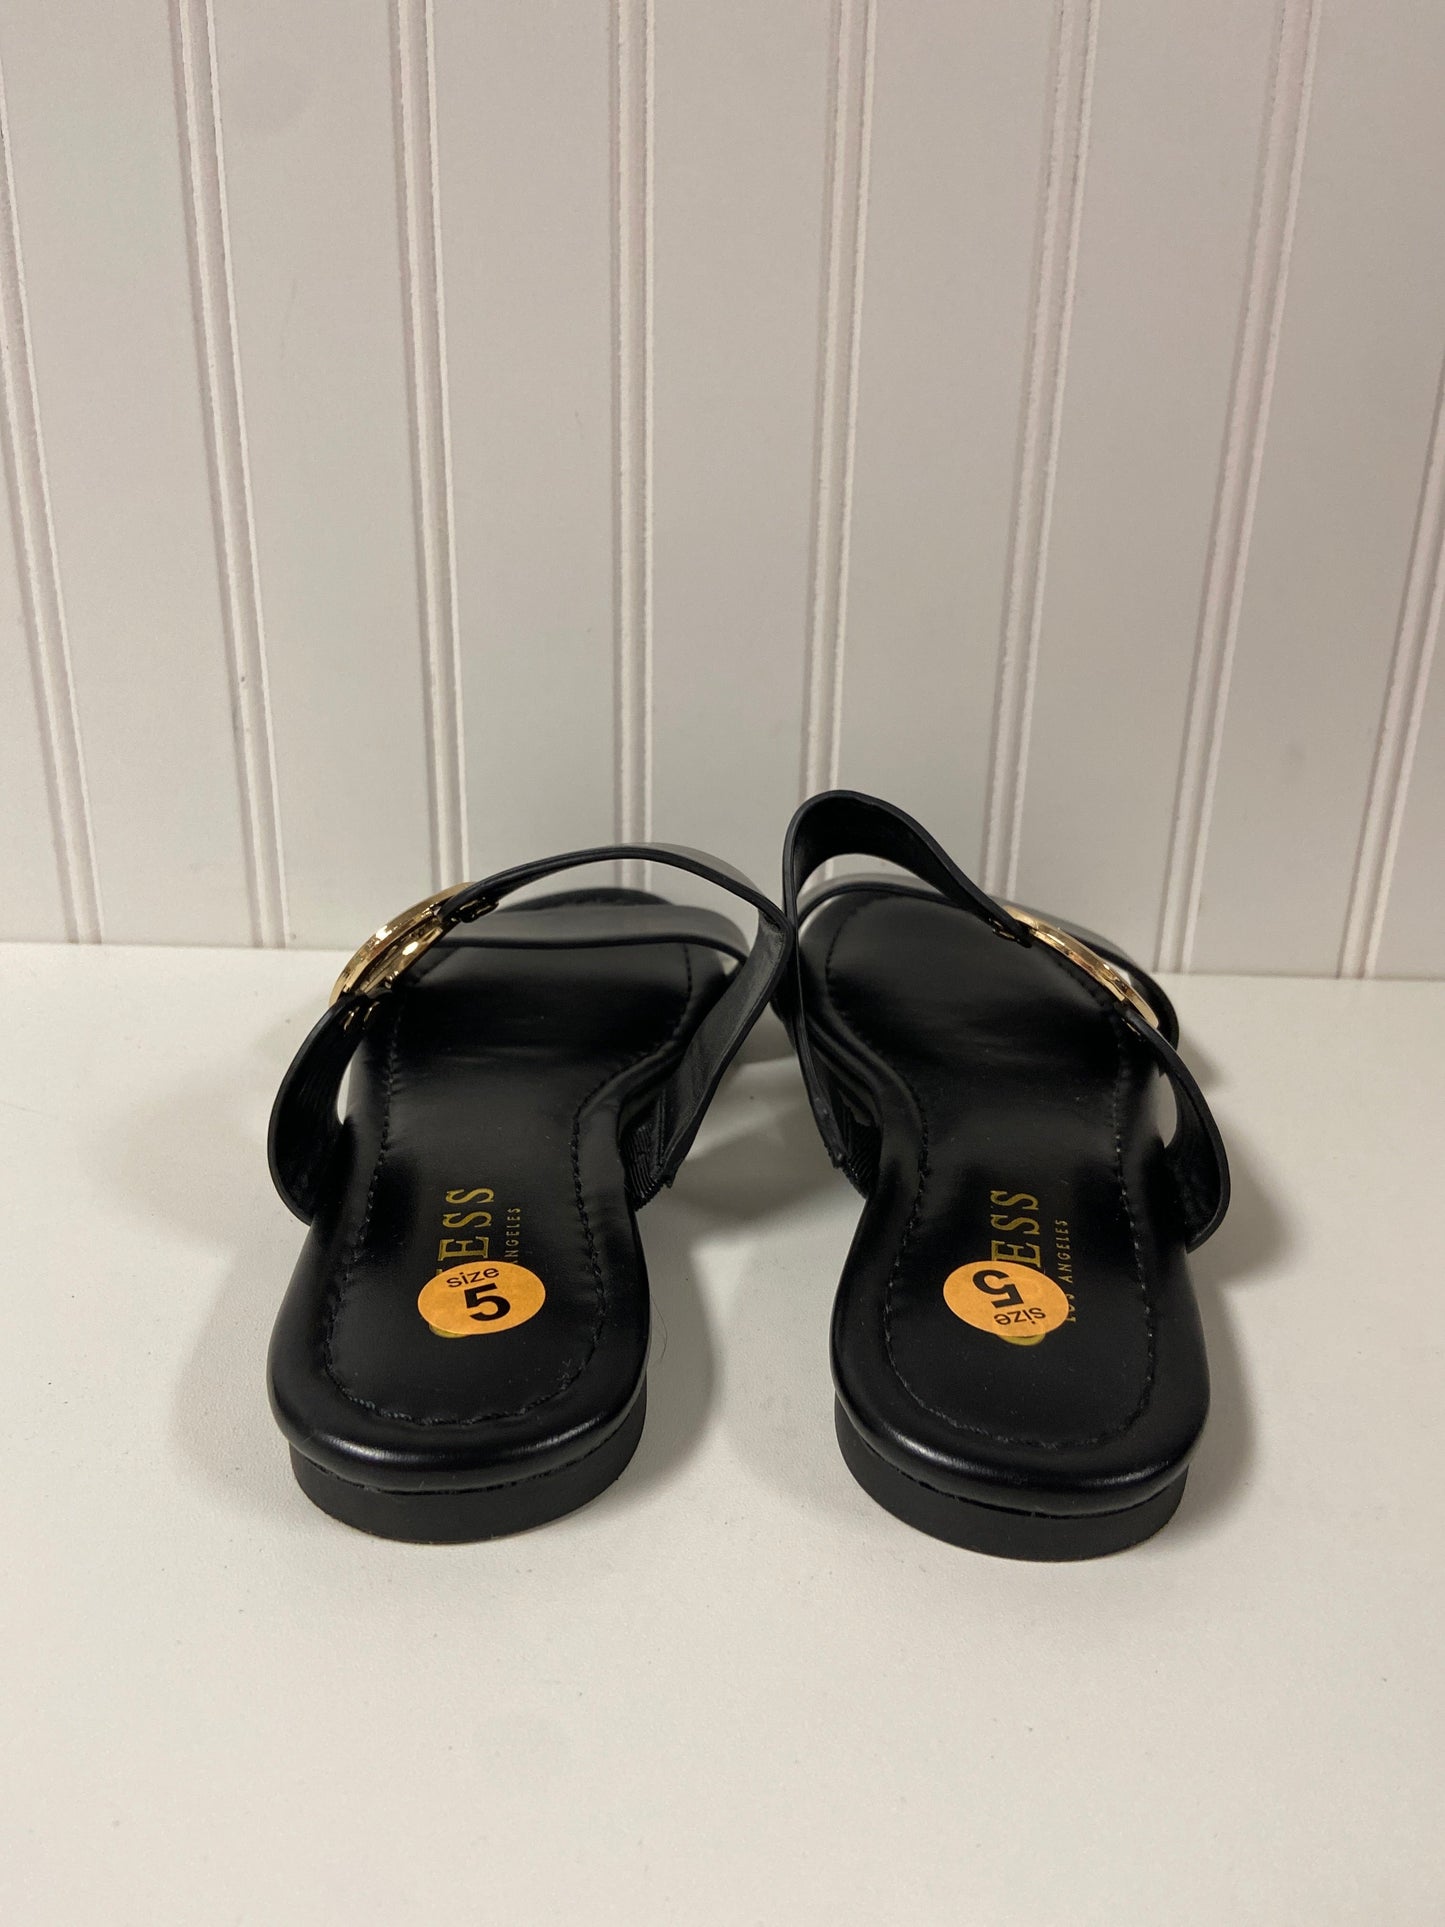 Black Sandals Flats Guess, Size 5